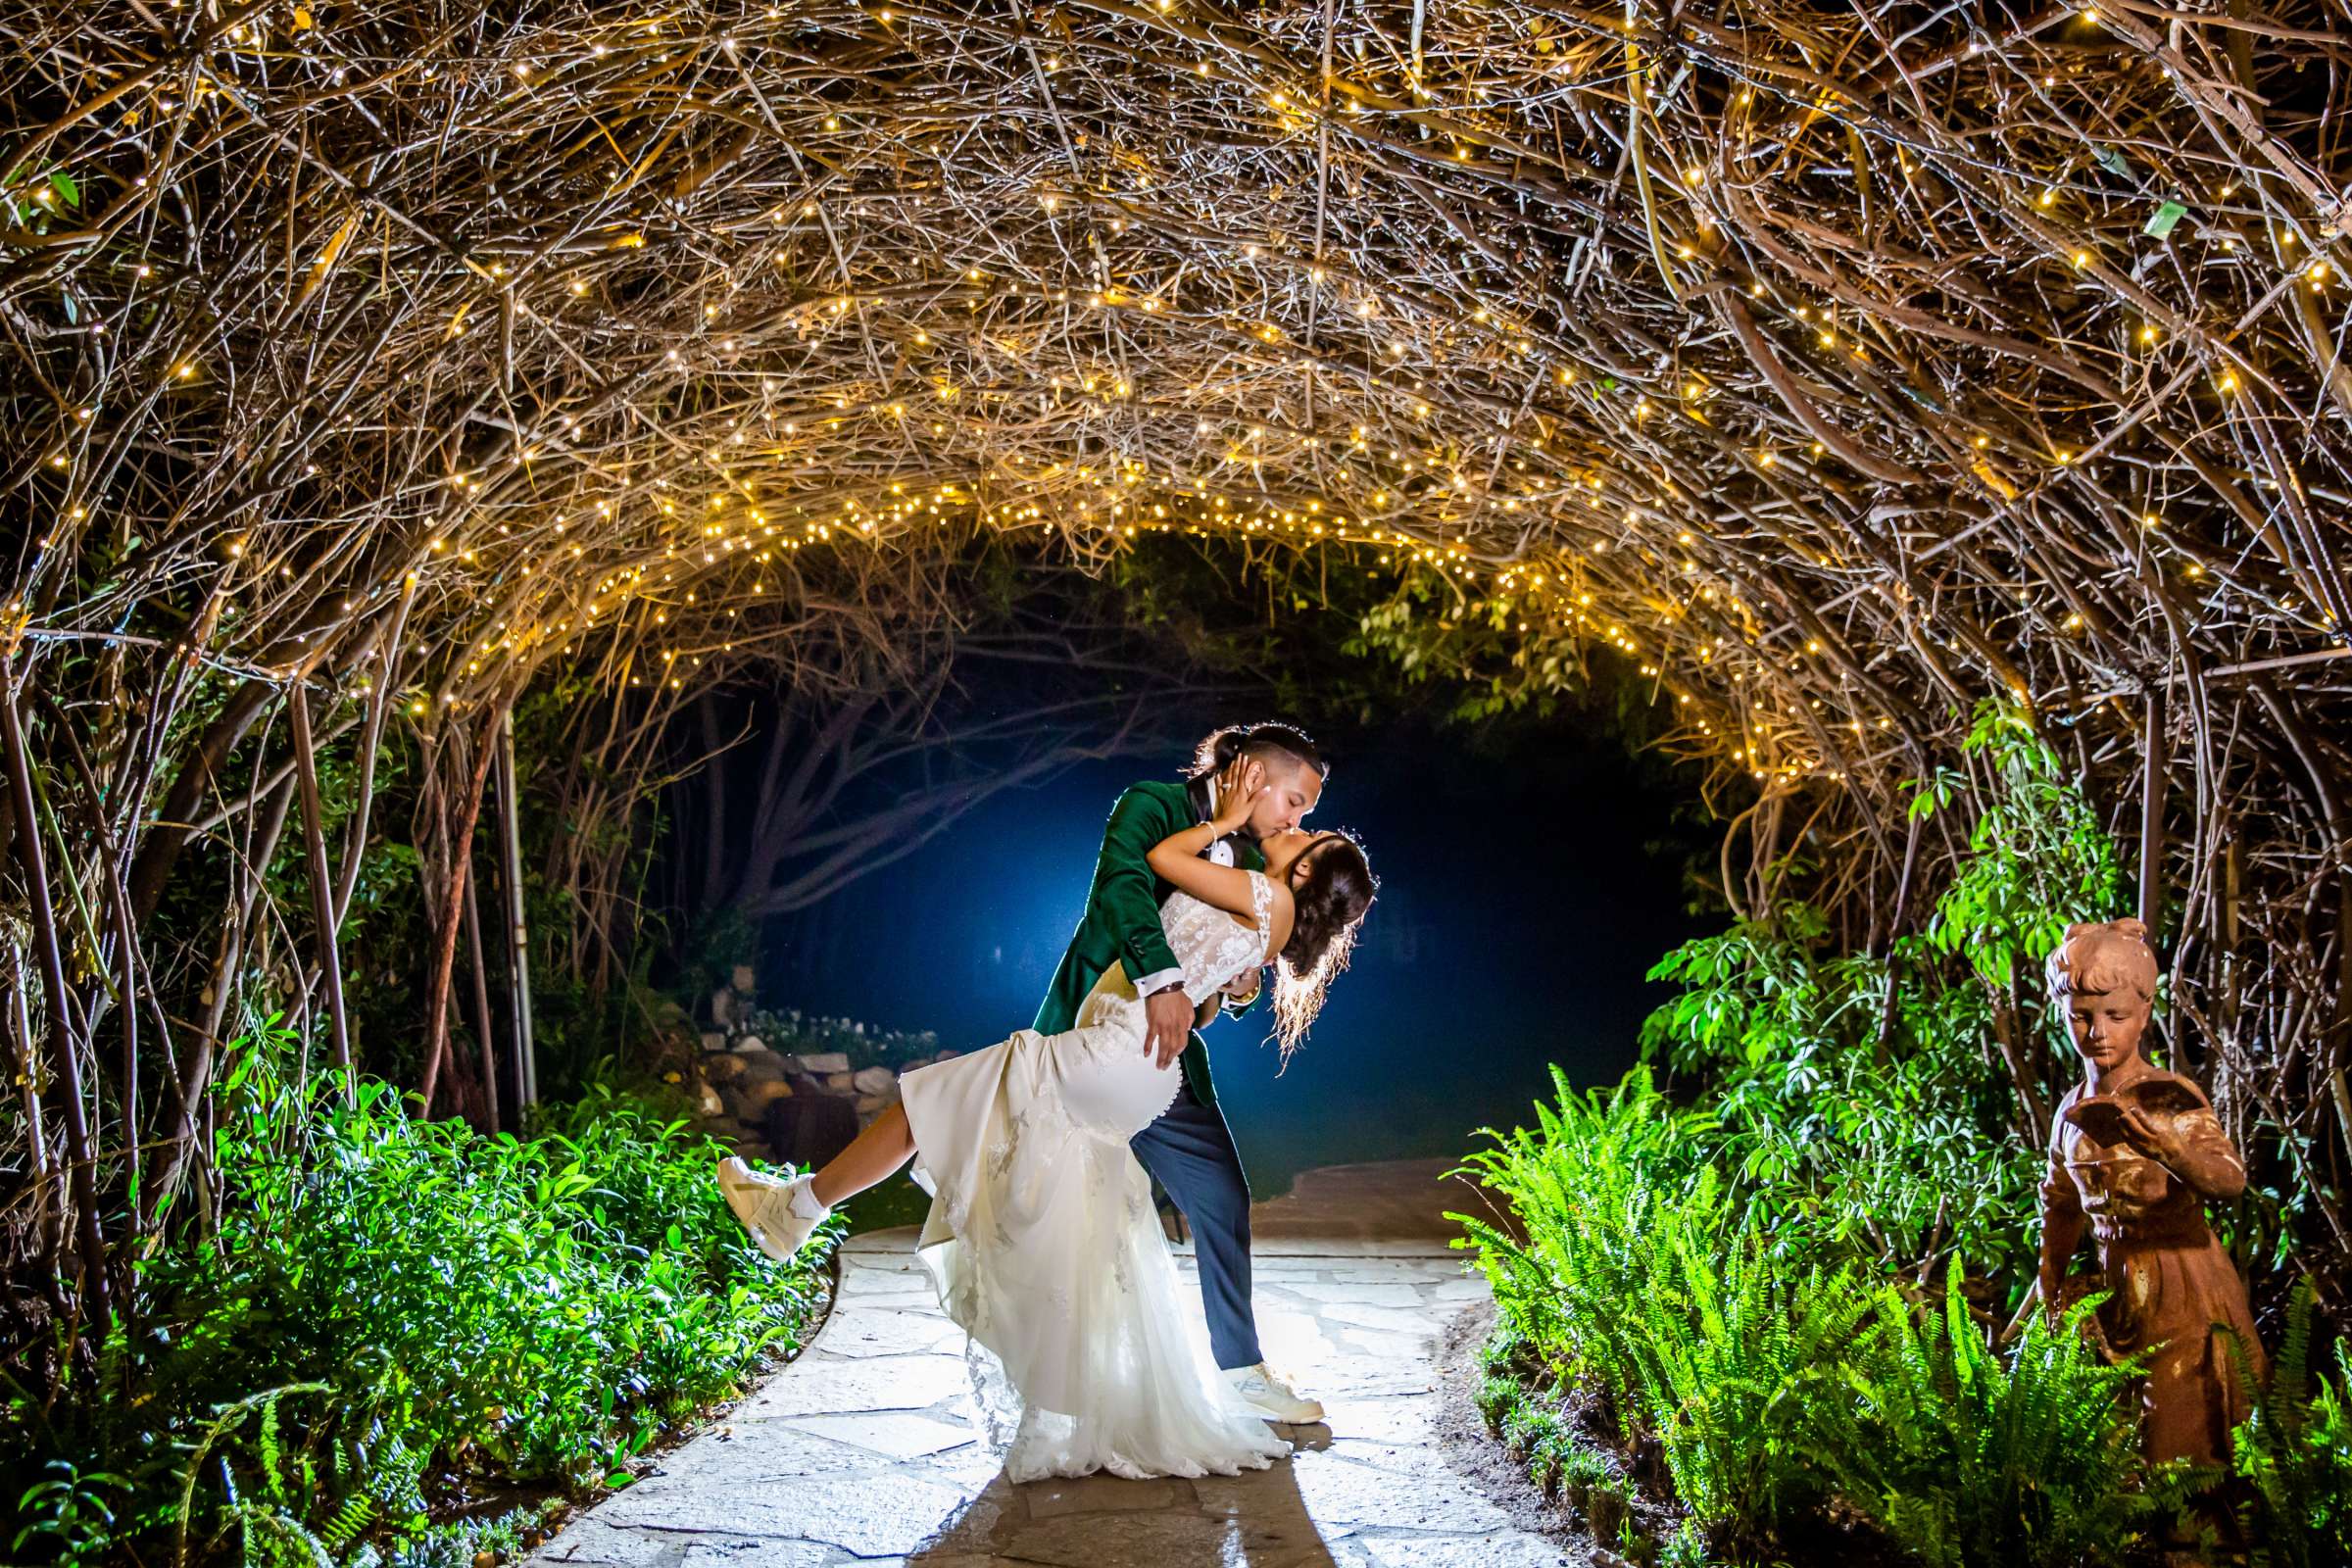 Twin Oaks House & Gardens Wedding Estate Wedding, Lottiesha and Christian Wedding Photo #2 by True Photography